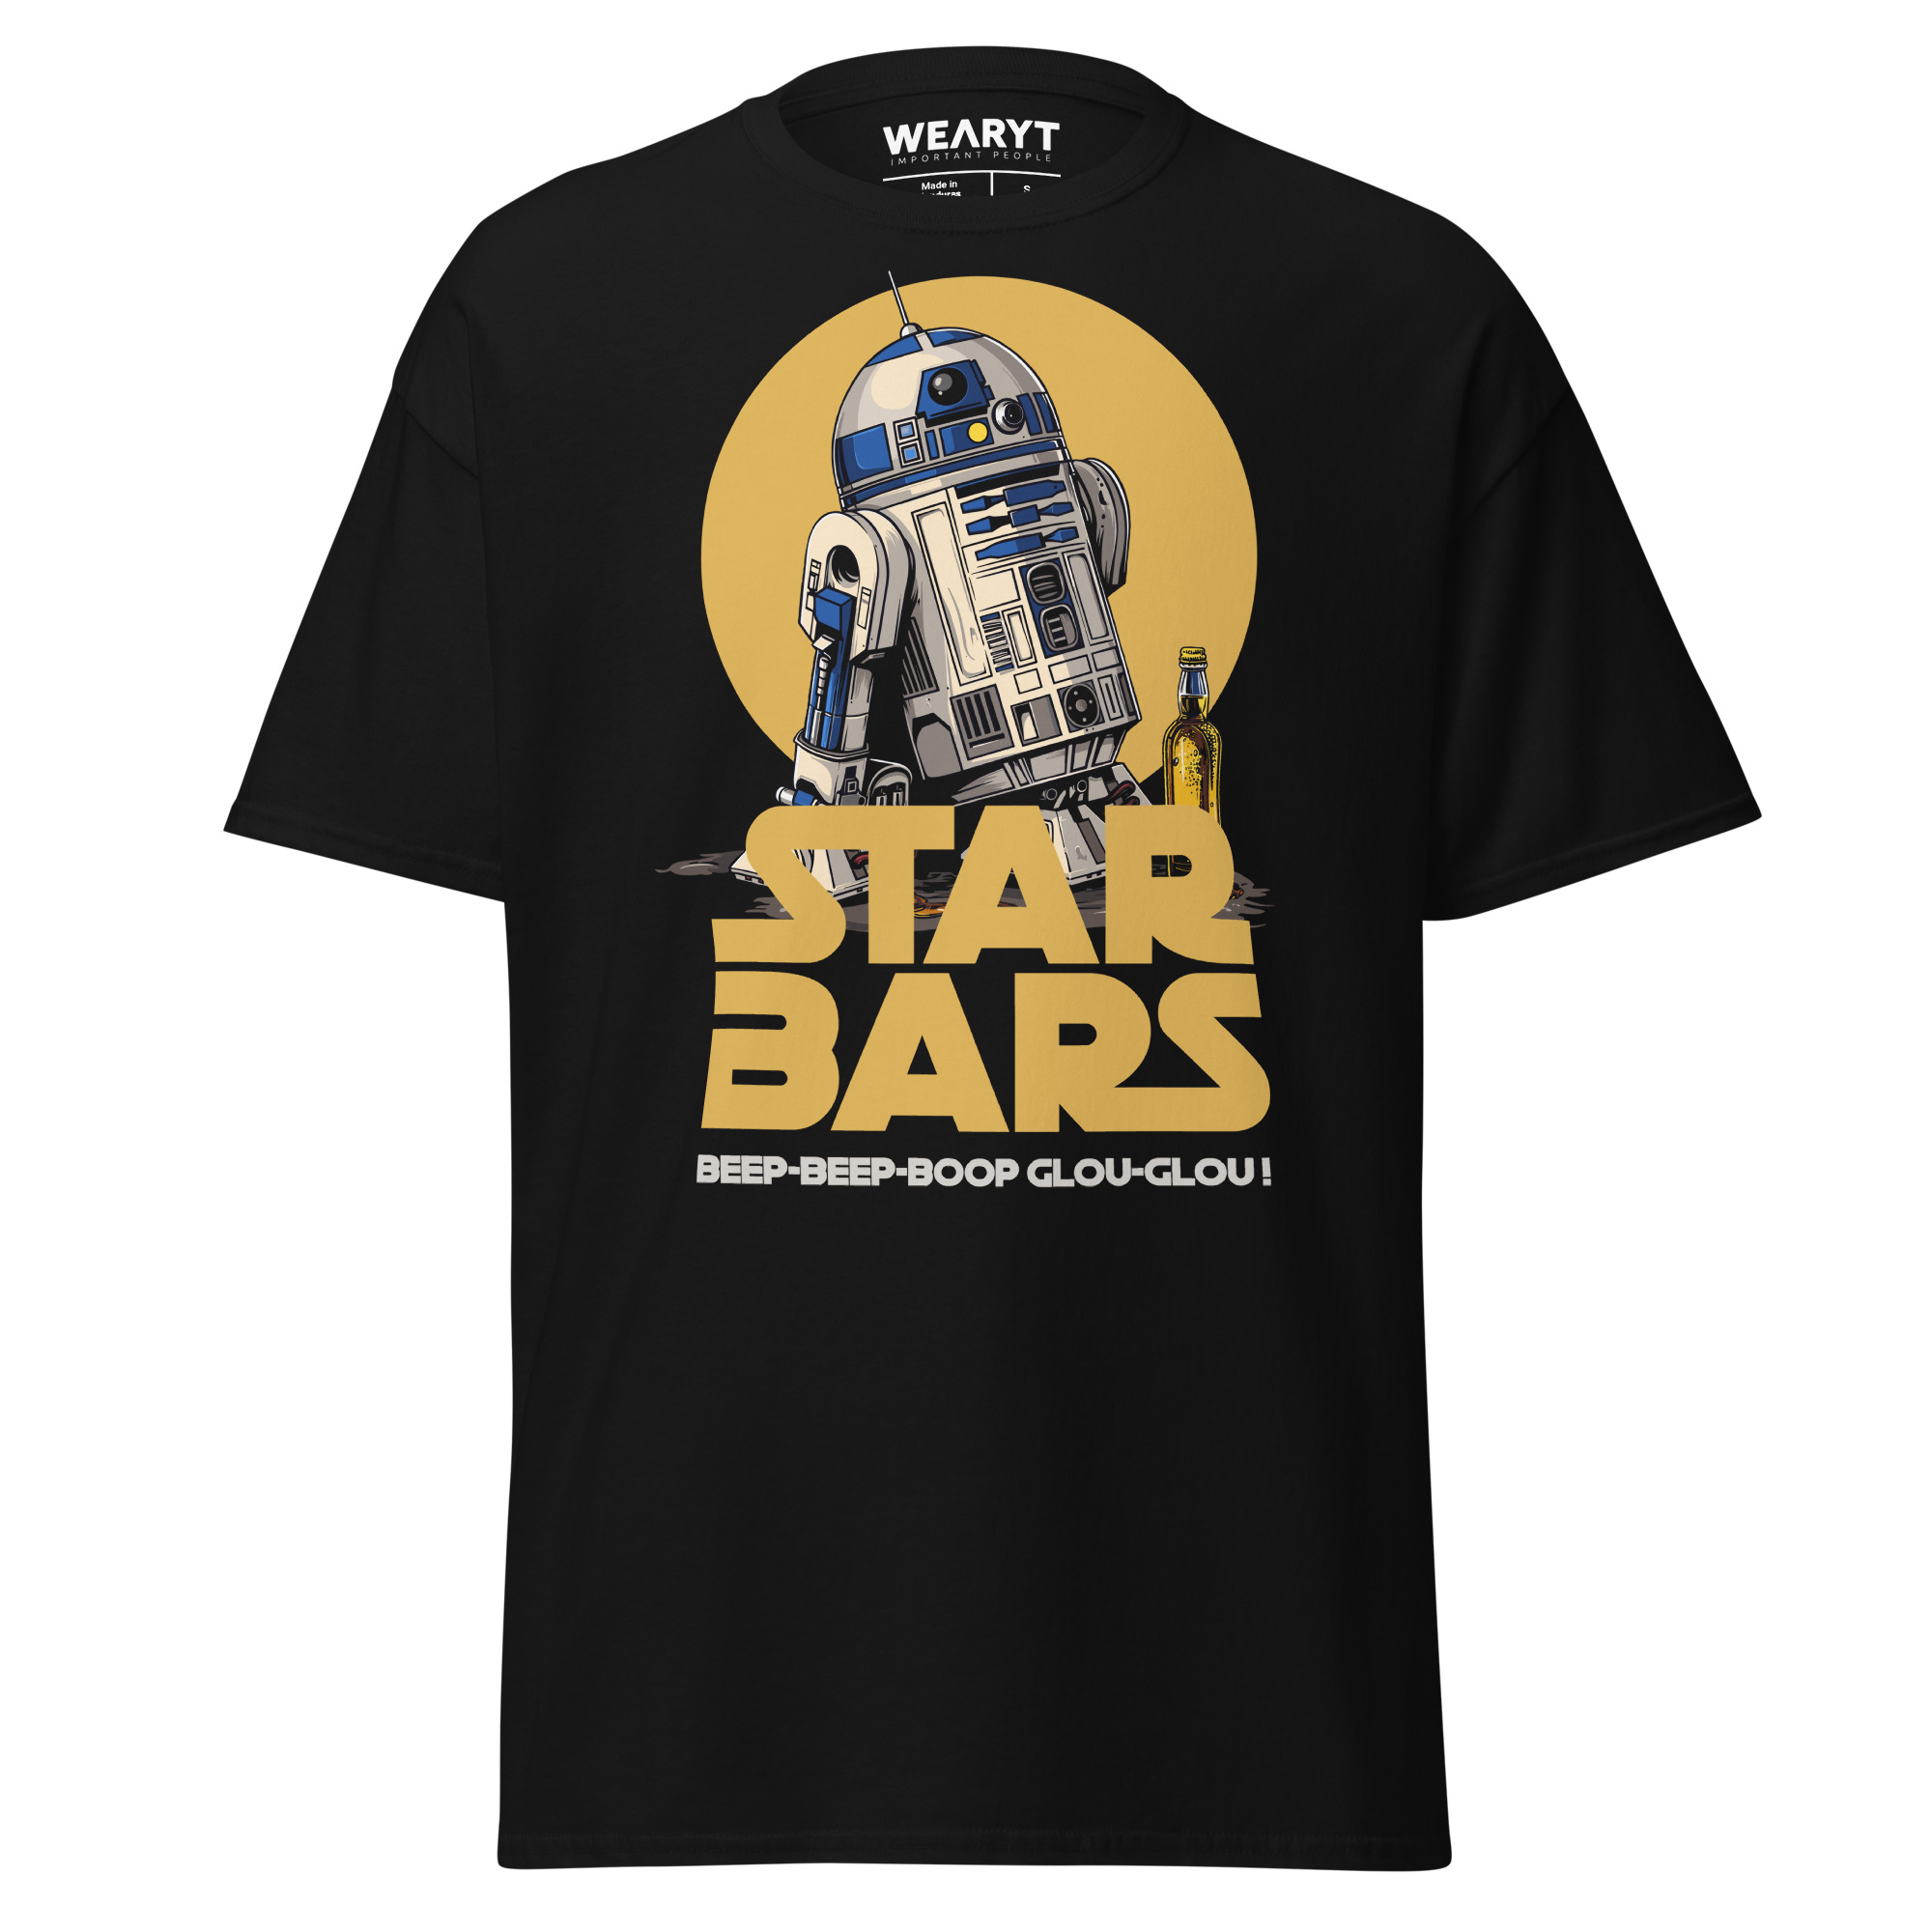 T-shirt – Star Bars – Beep-beep-boop Glou-glou! Men's Clothing Wearyt